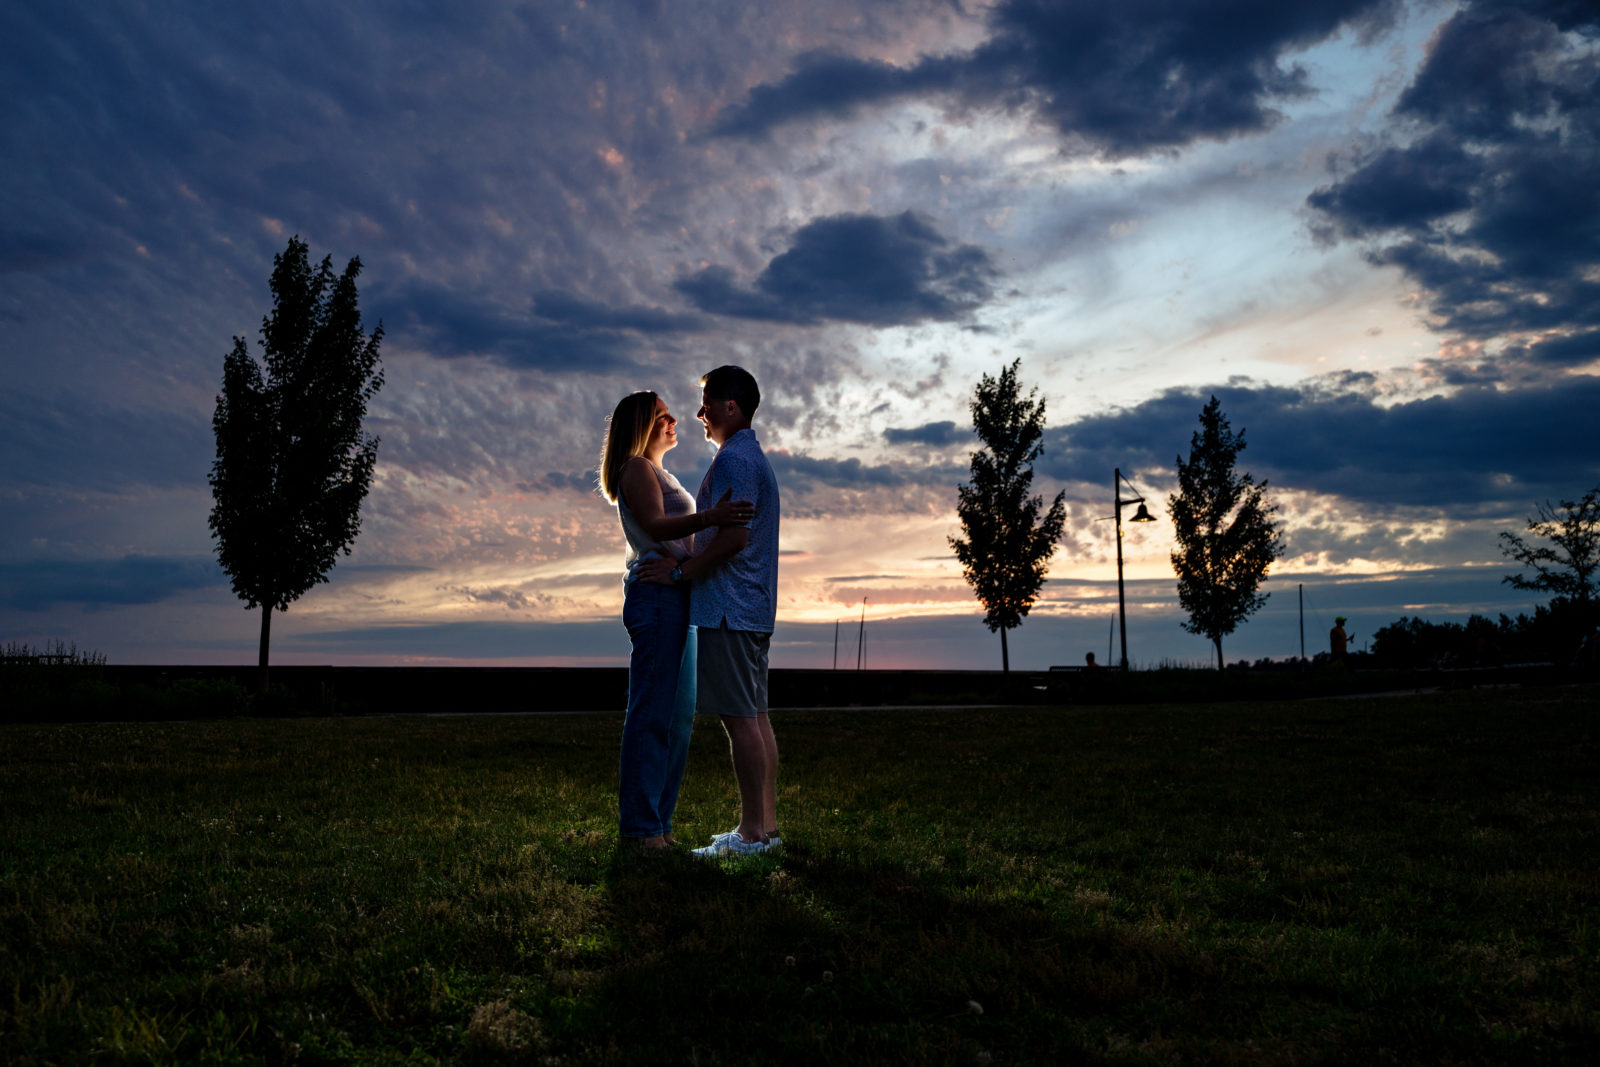 sunset portraits during engagement session burlington vermont by andy madea